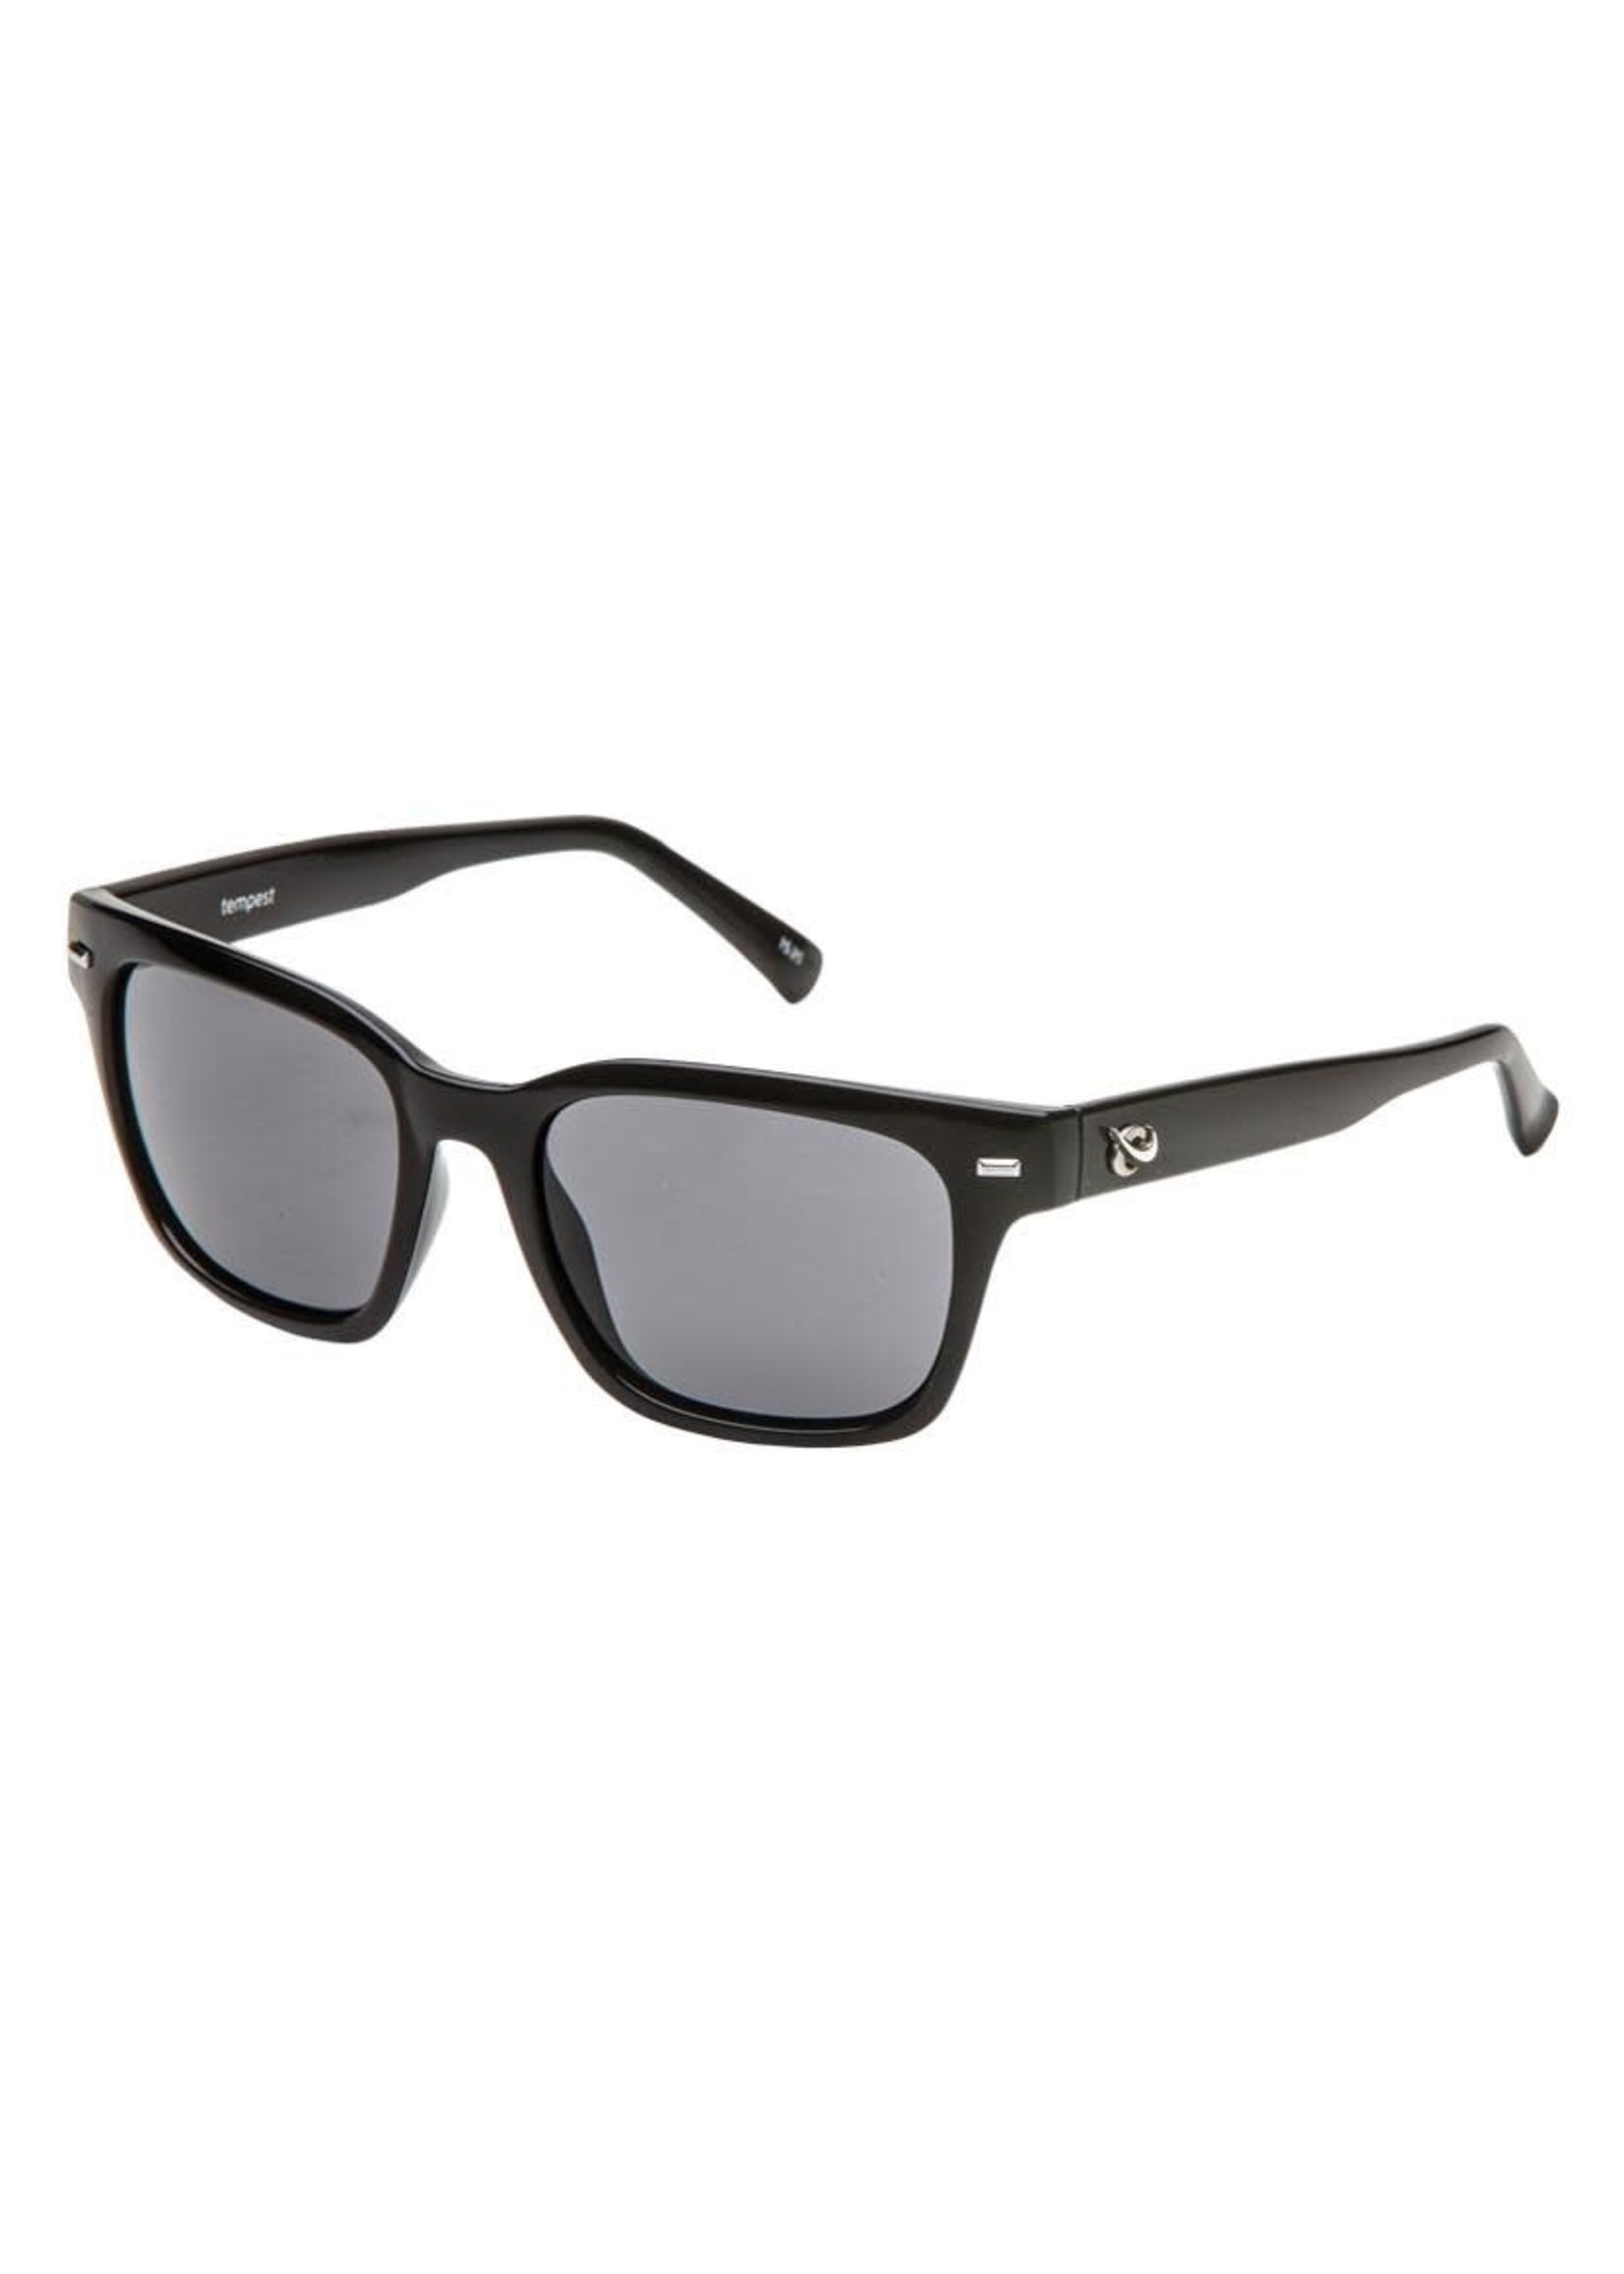 Urban Element Premium Sport Sunglasses Women's - Pure Outdoors